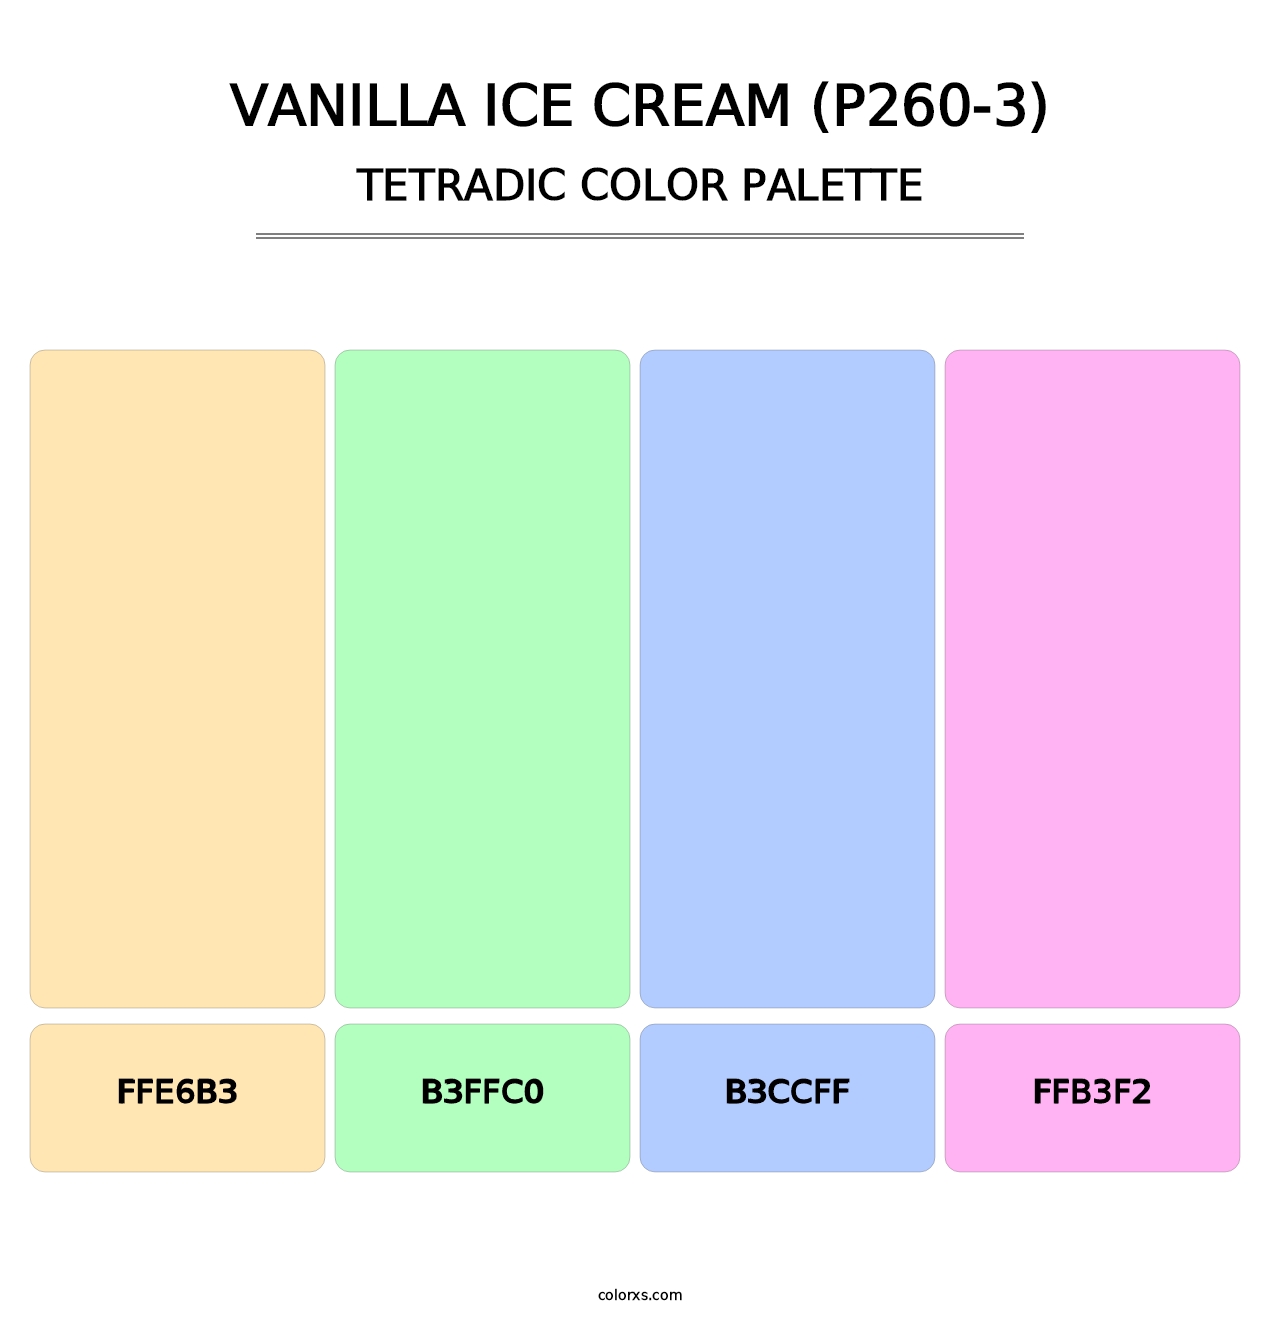 Vanilla Ice Cream (P260-3) - Tetradic Color Palette